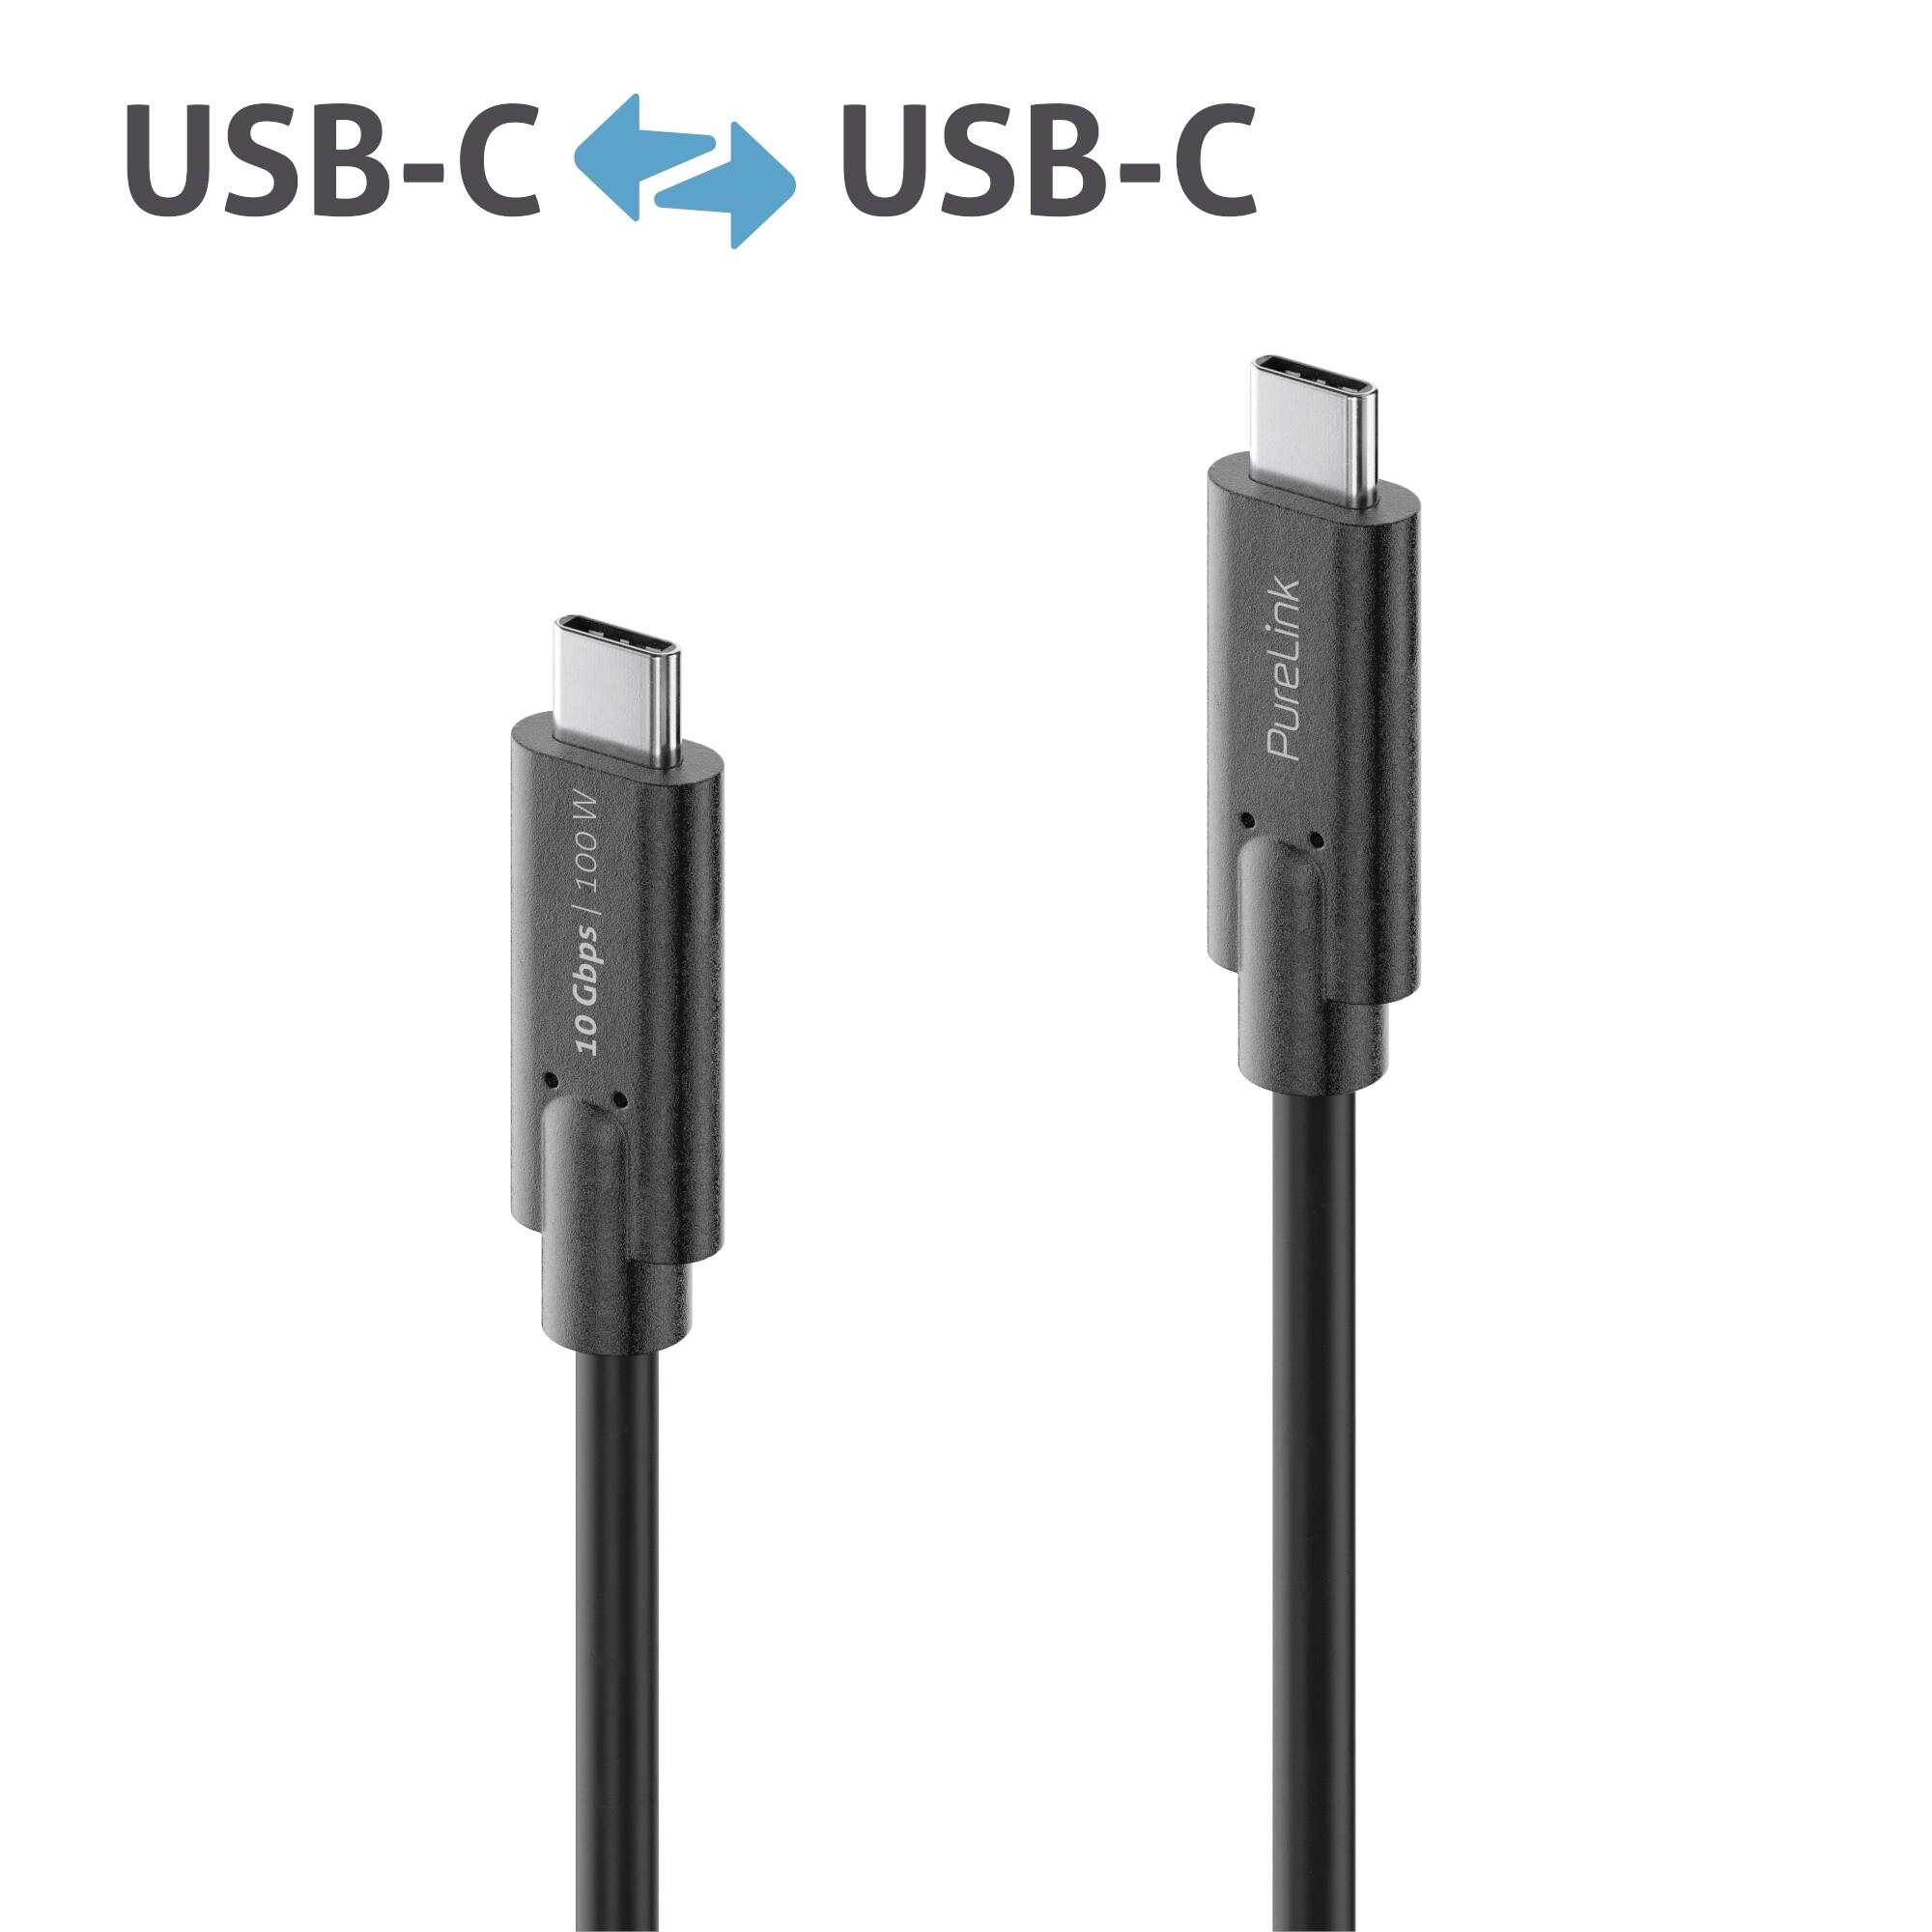 PURELINK iSeries Premium - USB-Kabel - USB-C (M) bis USB-C (M) - USB 3.1 Gen 2 - 20 V - 3 A - 1.5 m